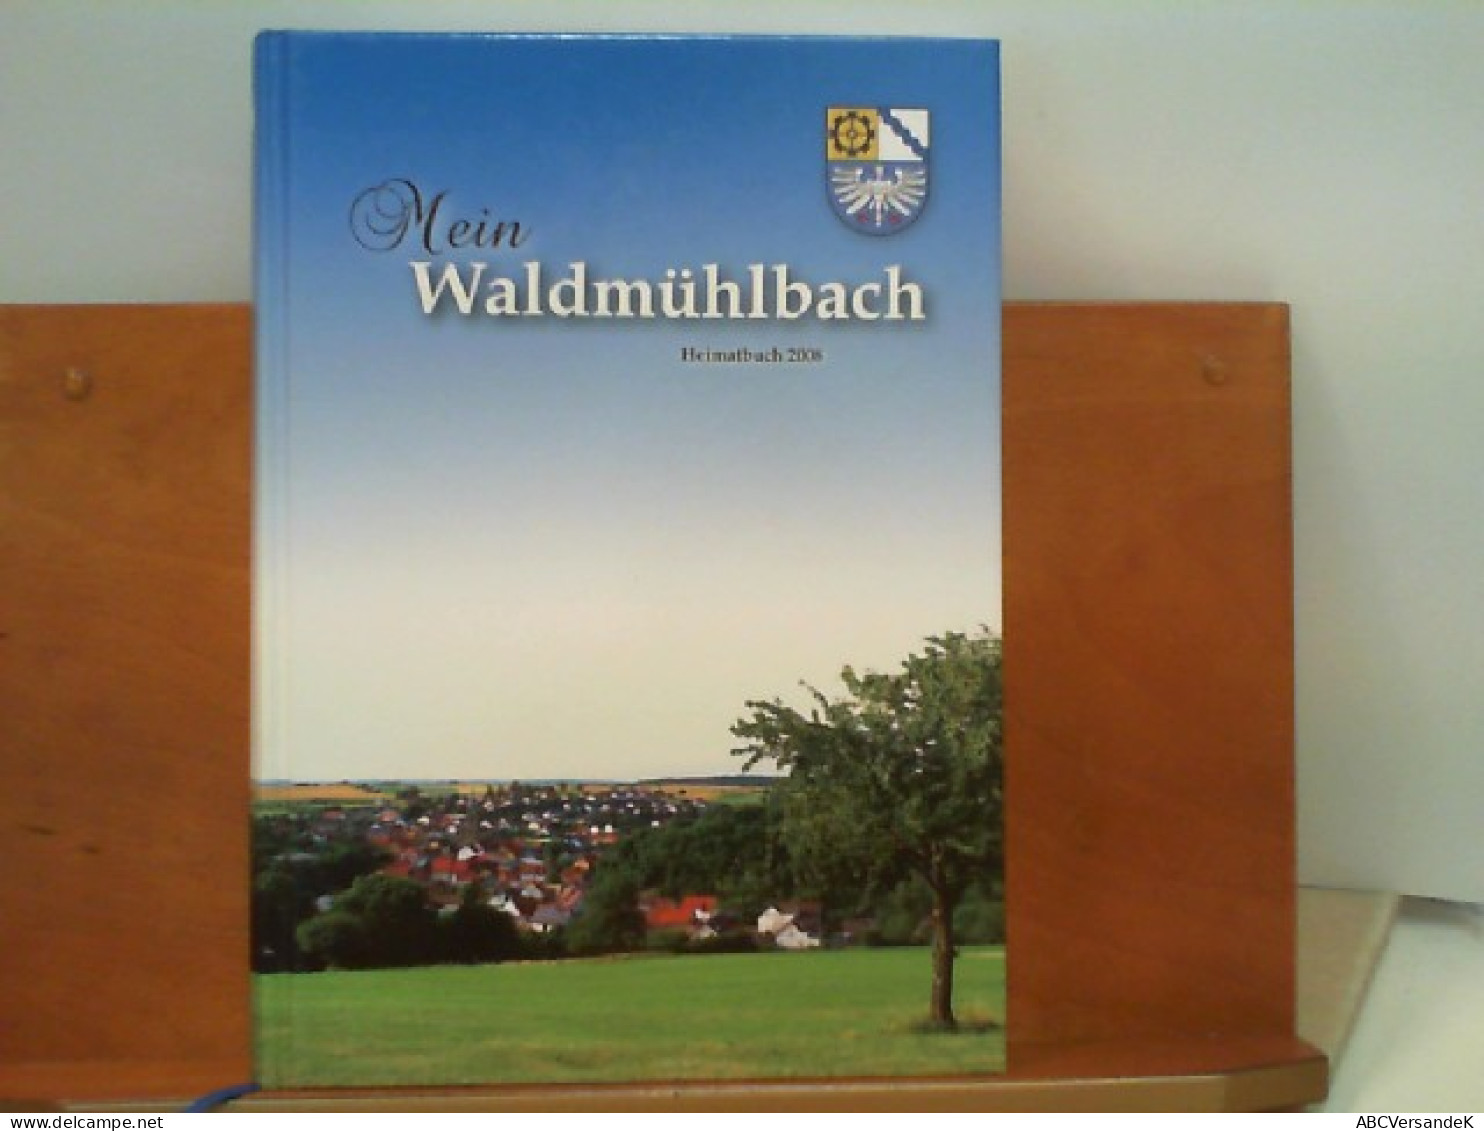 Mein Waldmühlbach - Heimatbuch 2008 - Germania